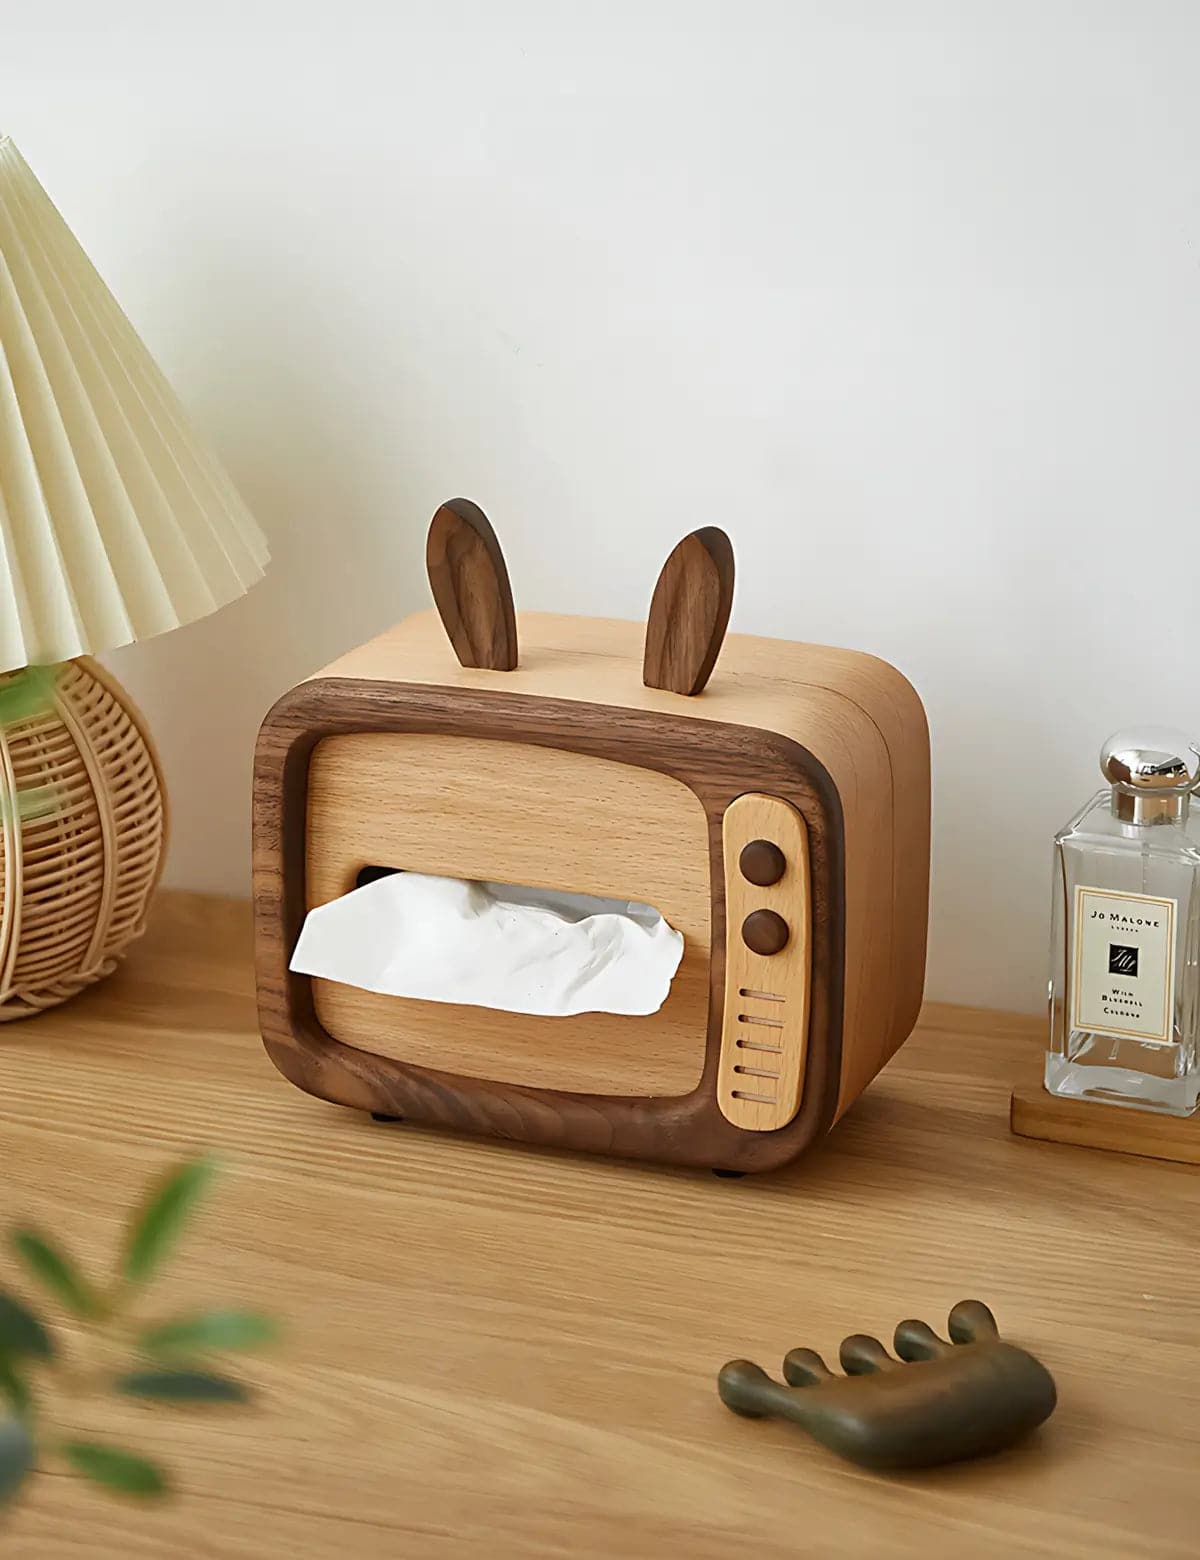 tv-rabbit-wooden-tissue-box-home-accessory-04